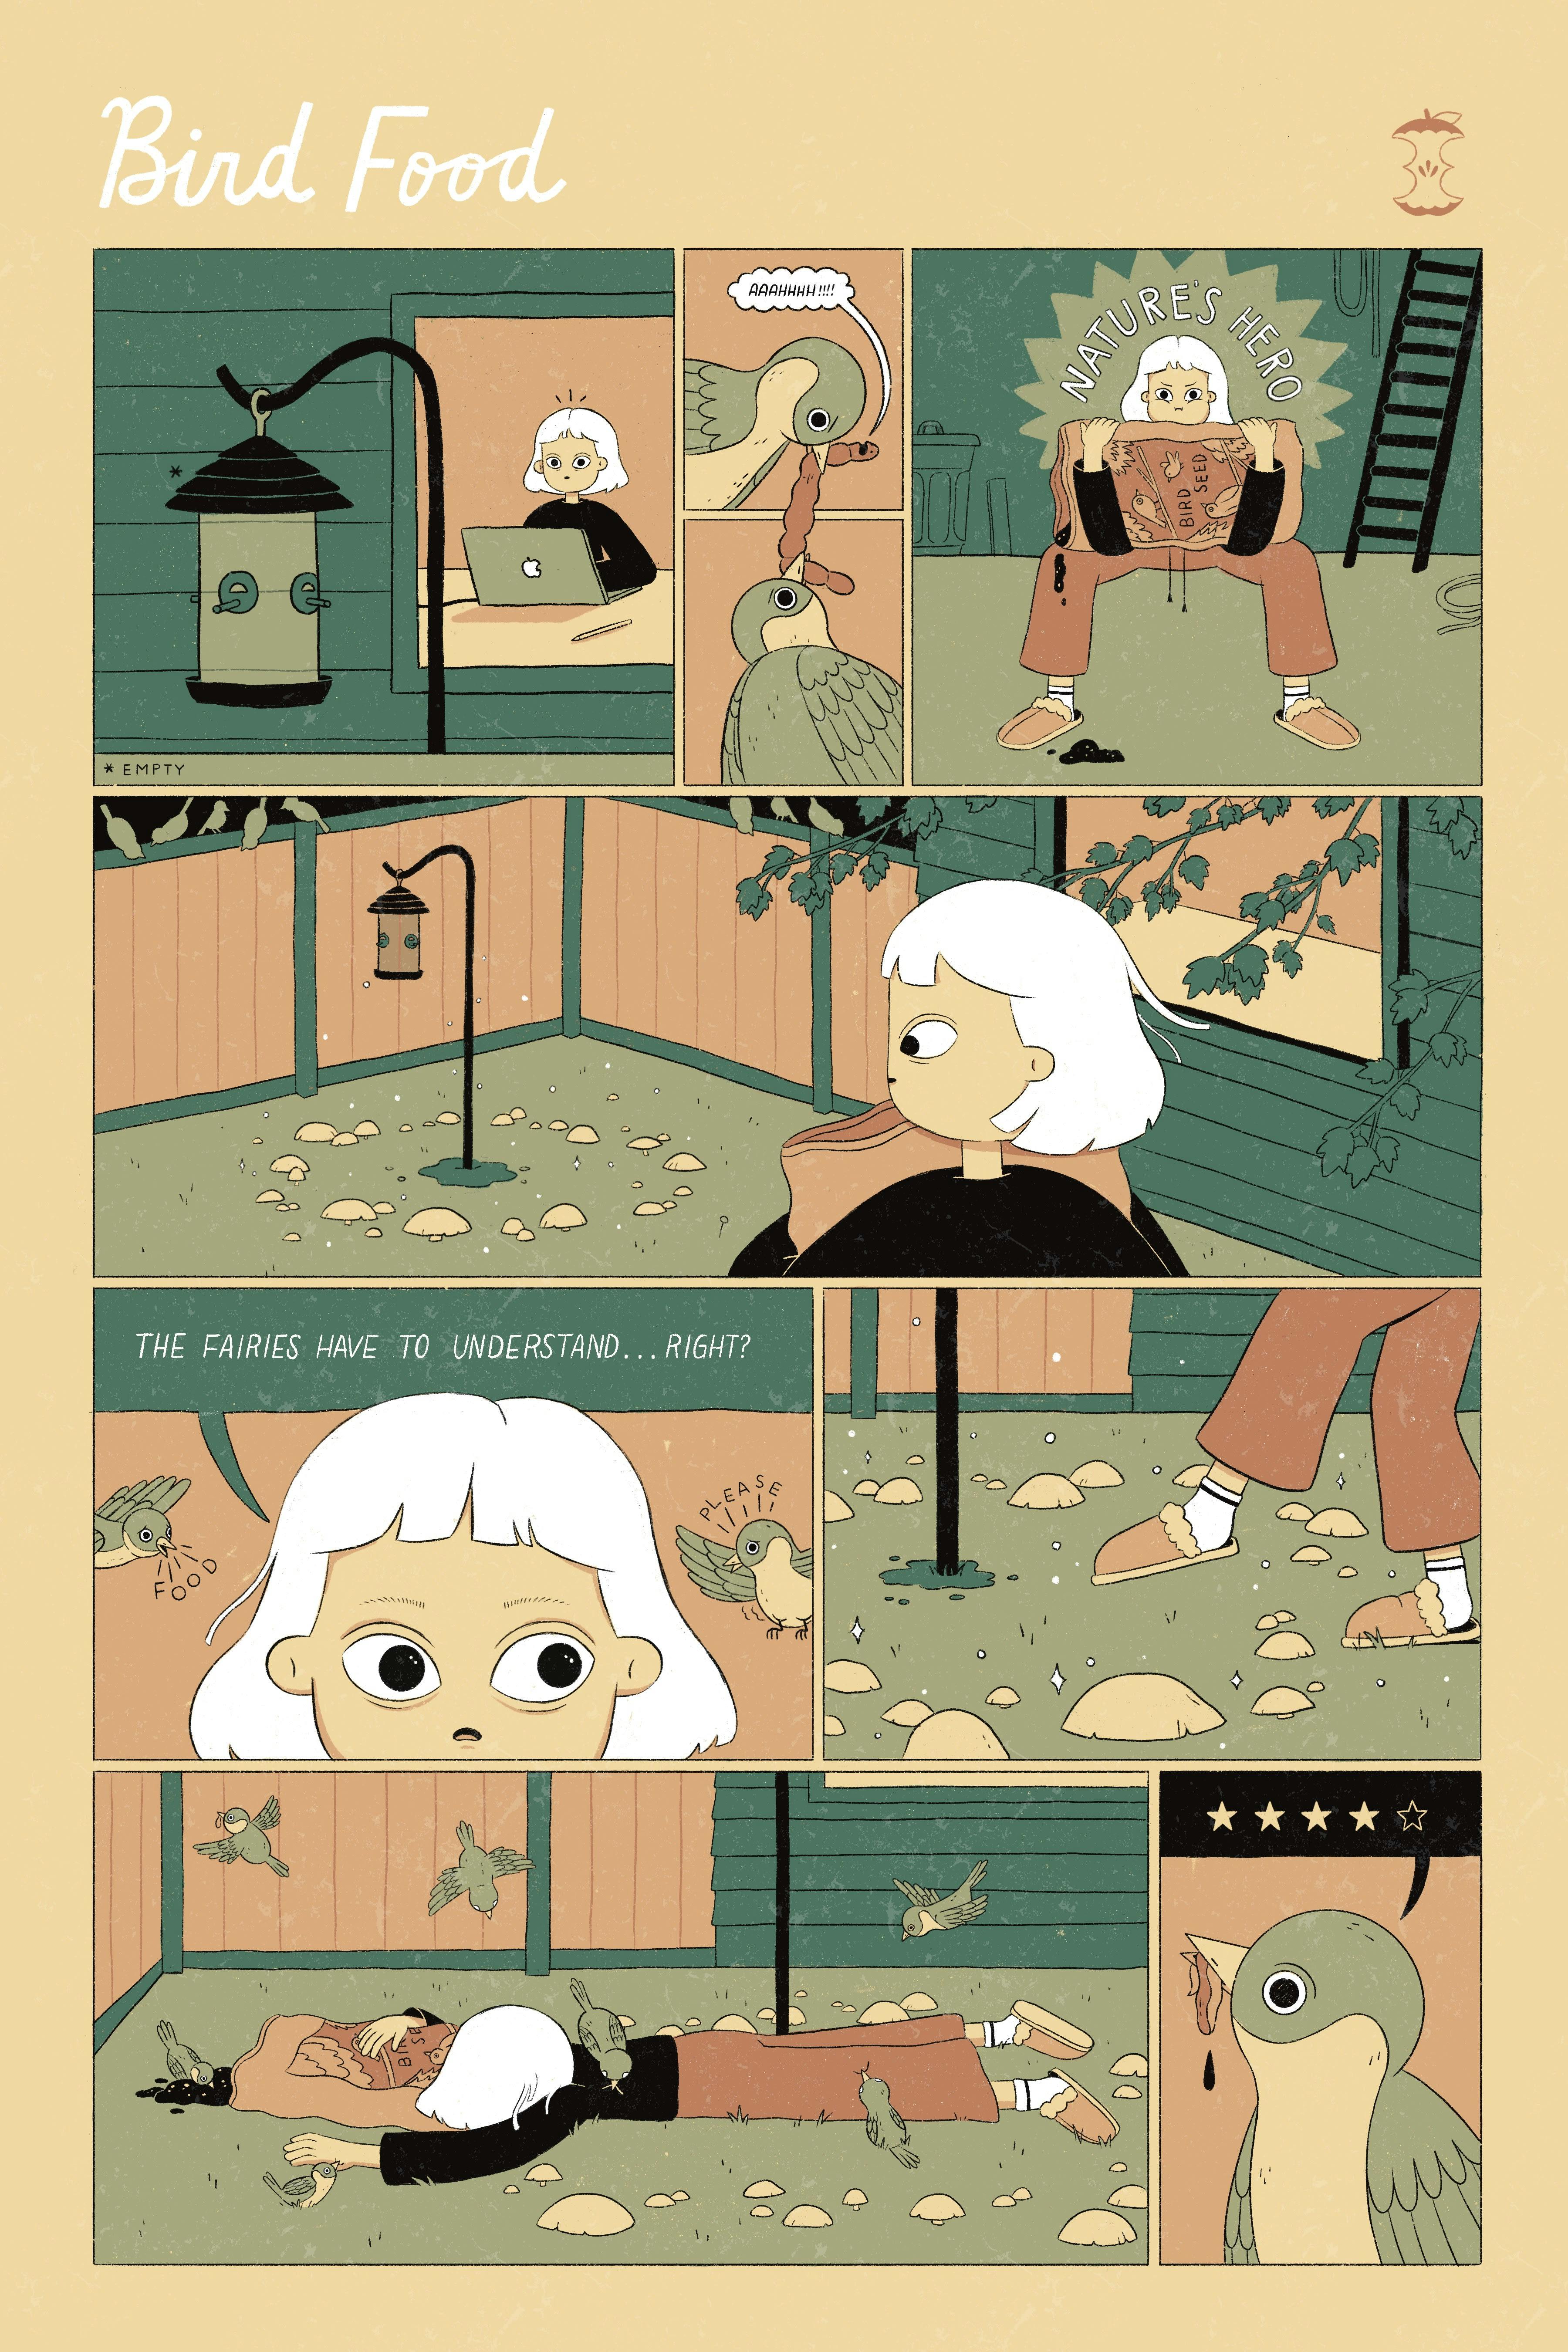 Bird Food Comic